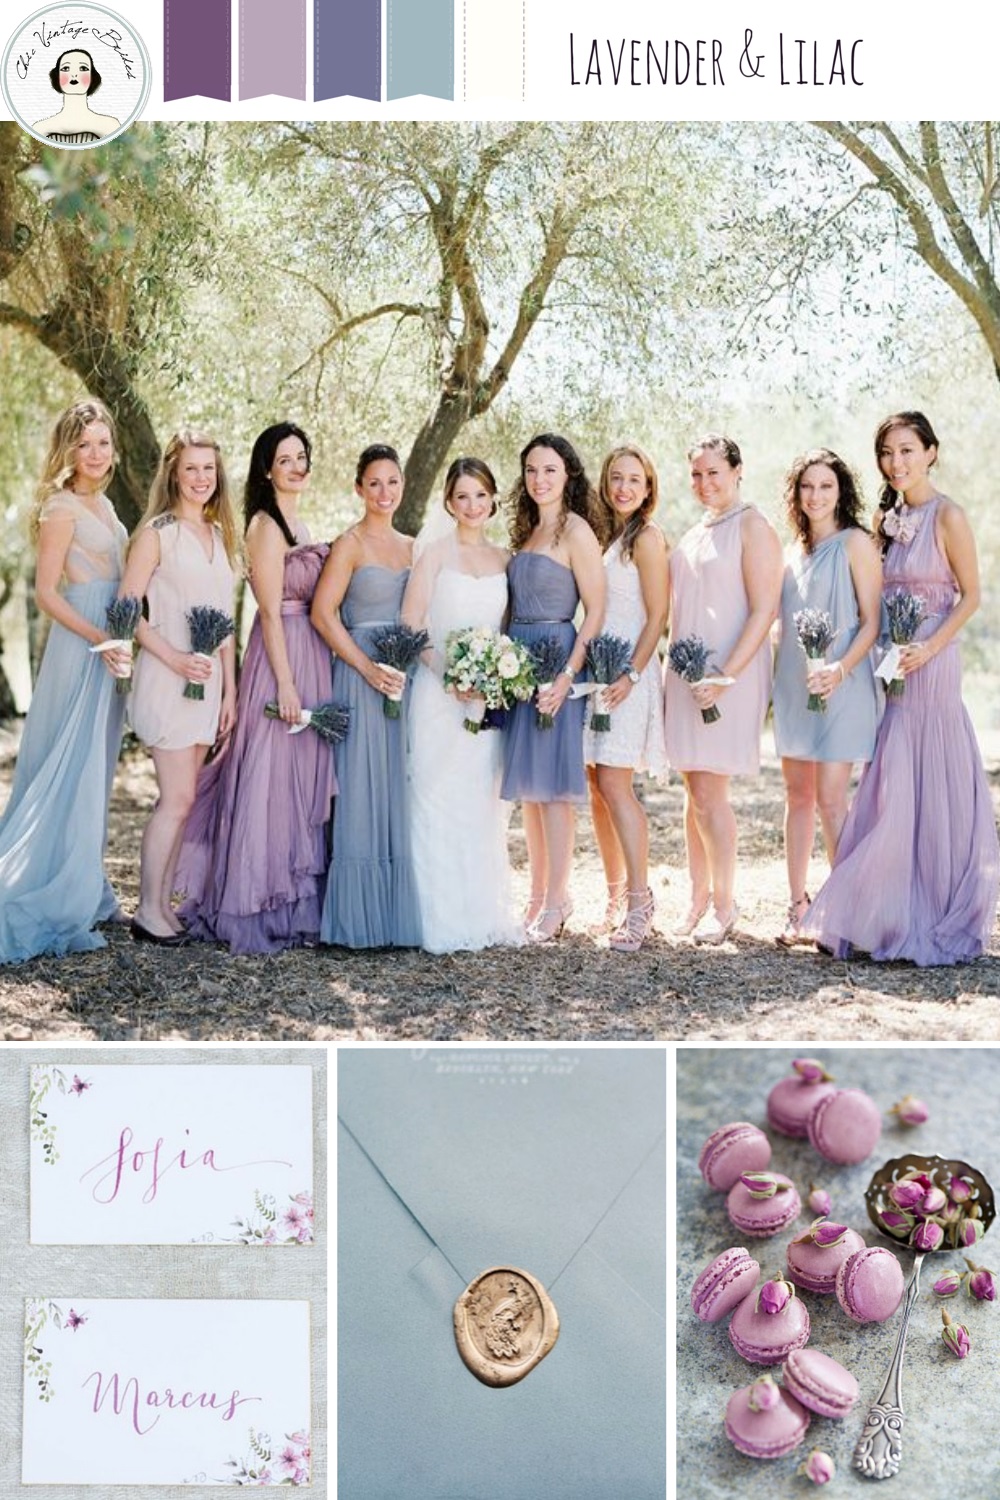 A Romantic Lilac & Lavender Wedding Inspiration Board